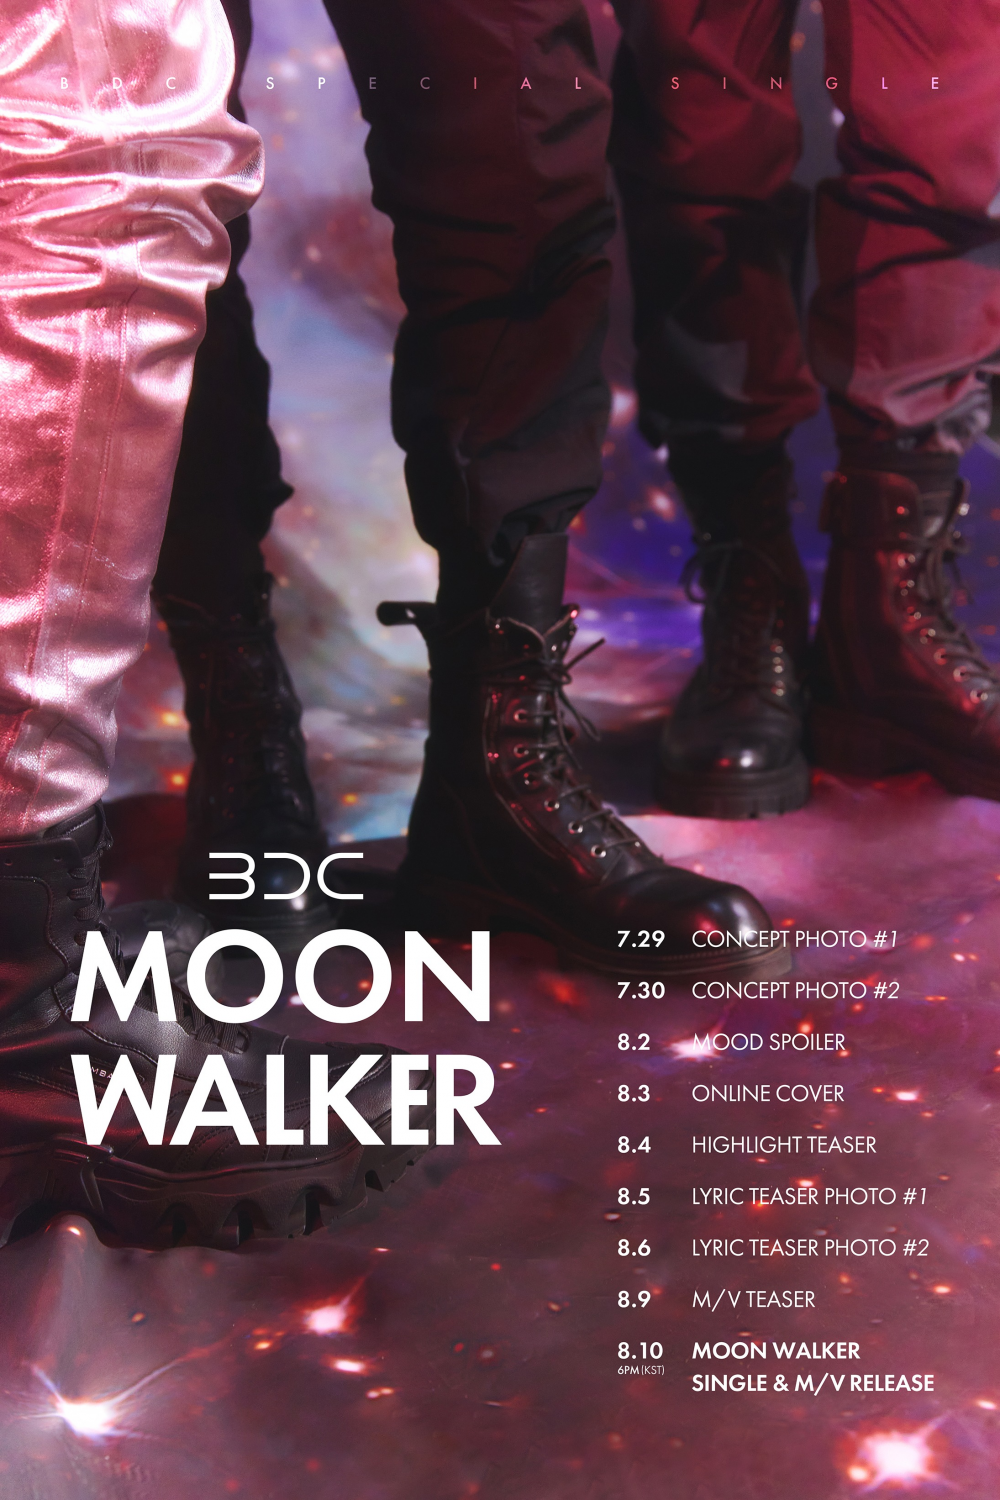 [Релиз] BDC сингл "Moon Walker": видео-тизер